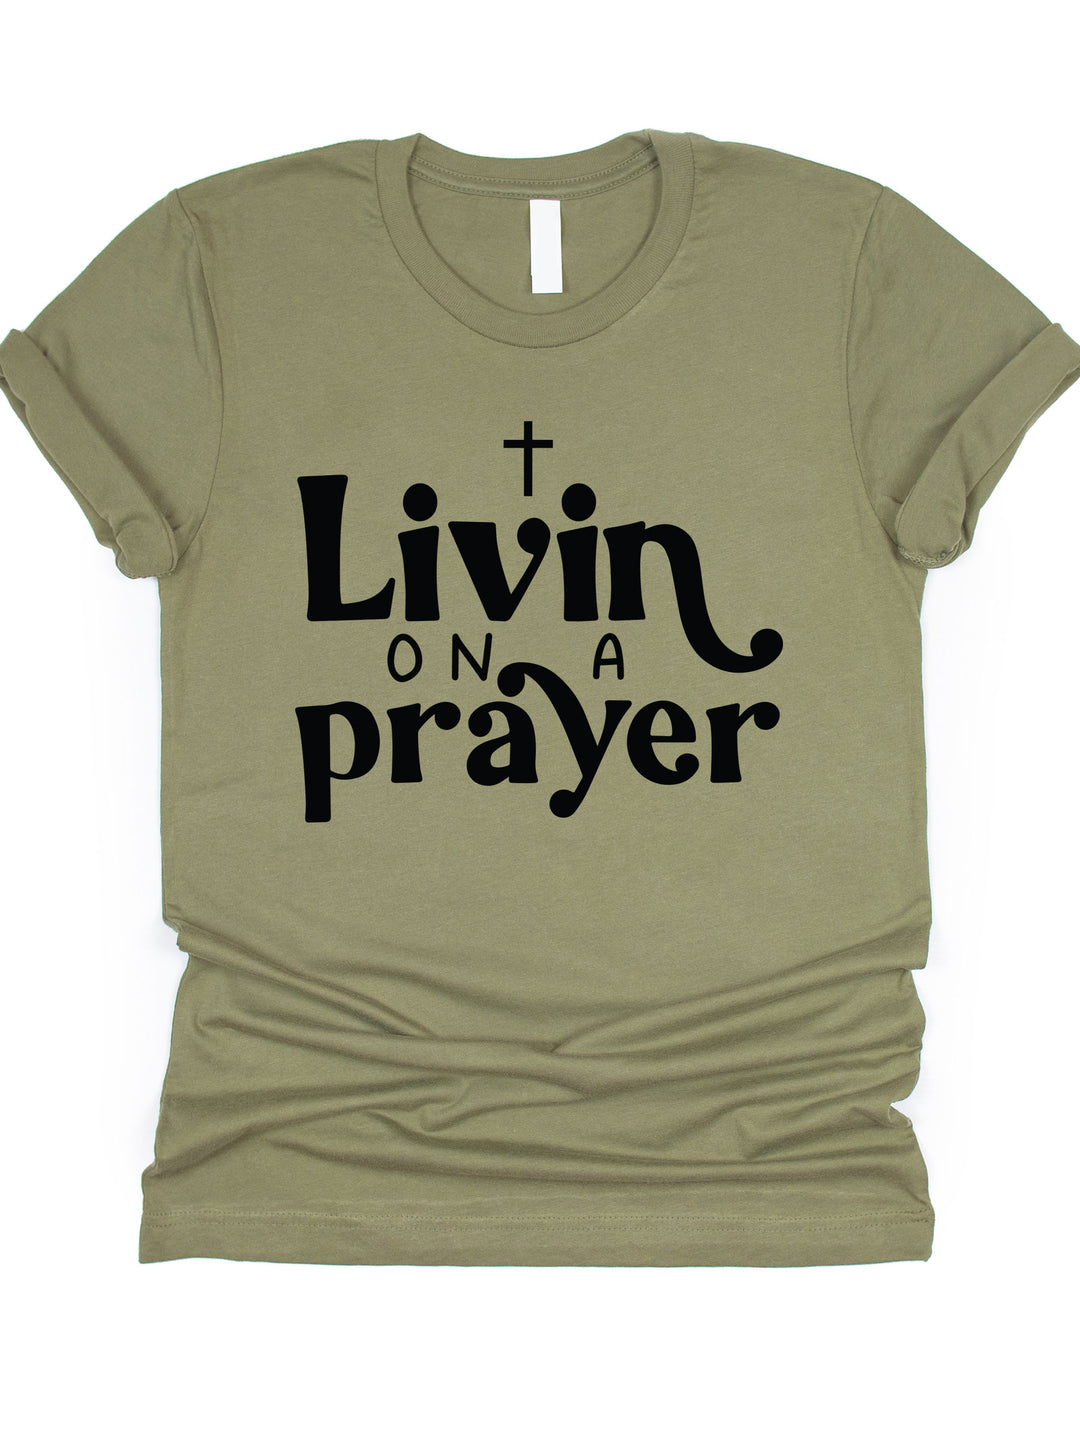 Livin On A Prayer Graphic Tee